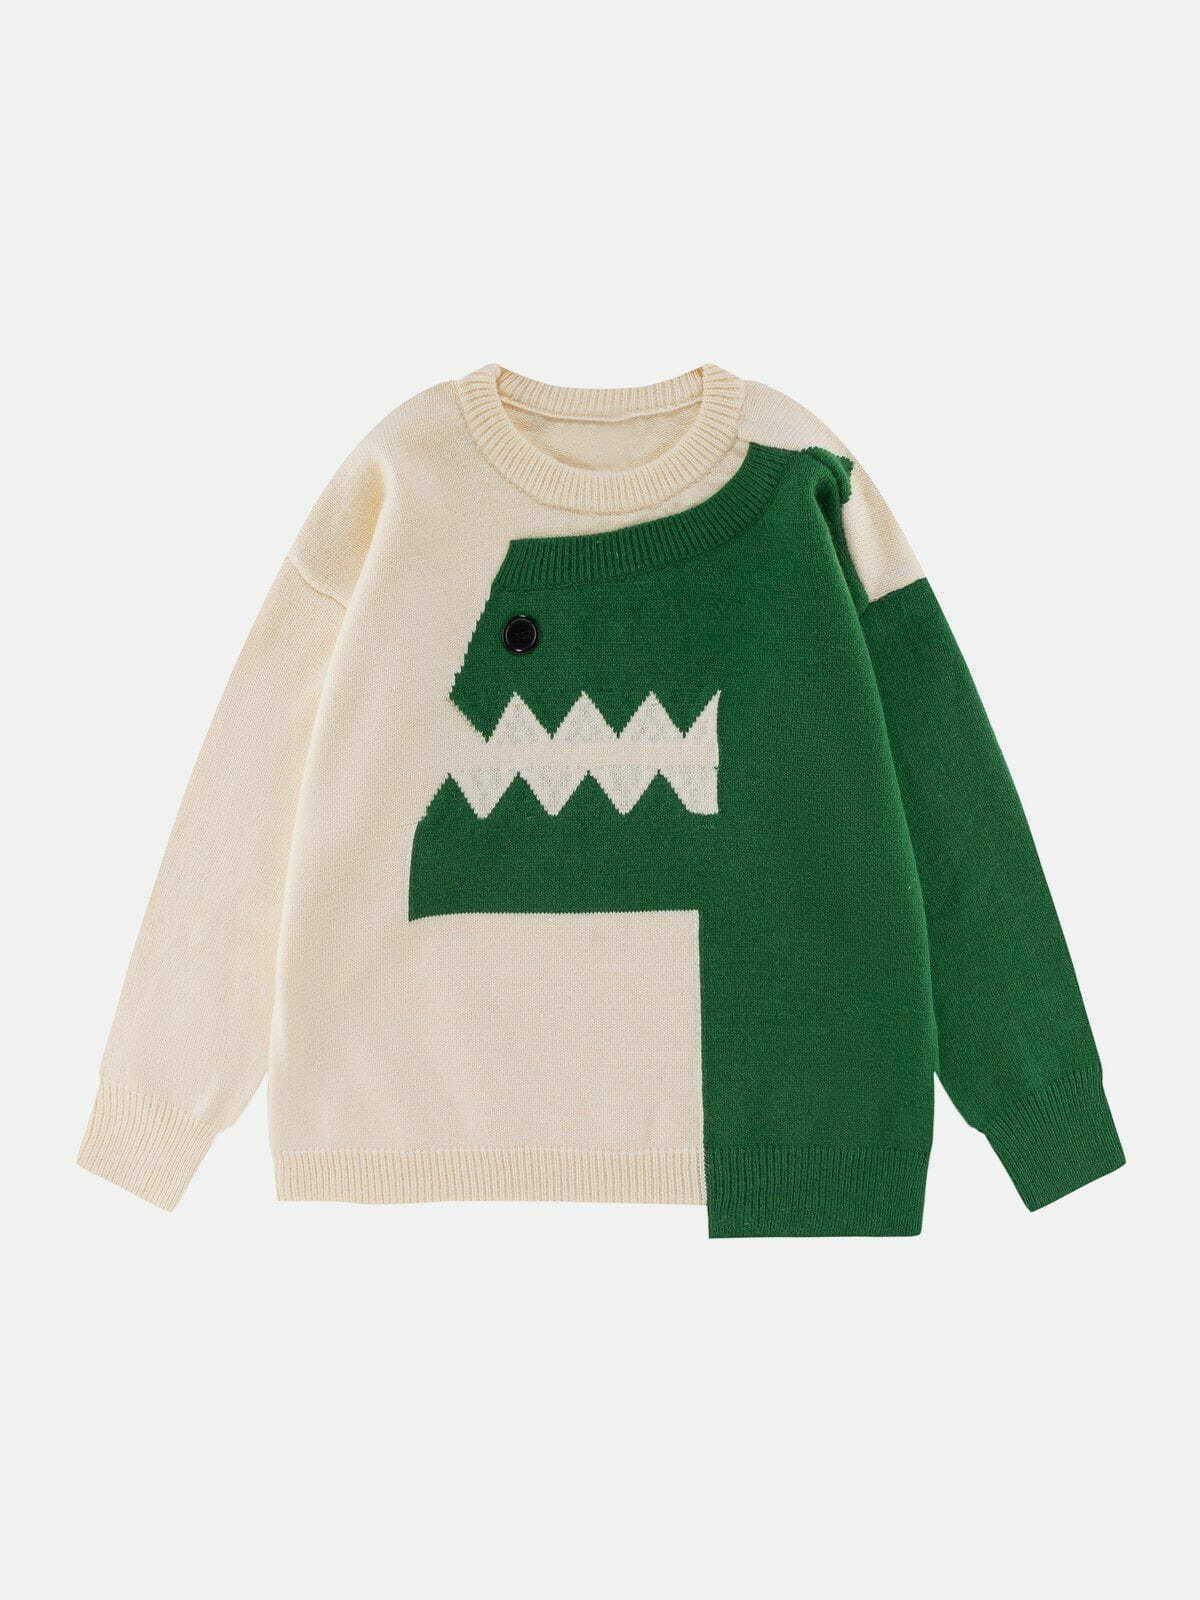 vibrant dinosaur sweater urban streetwear 8147